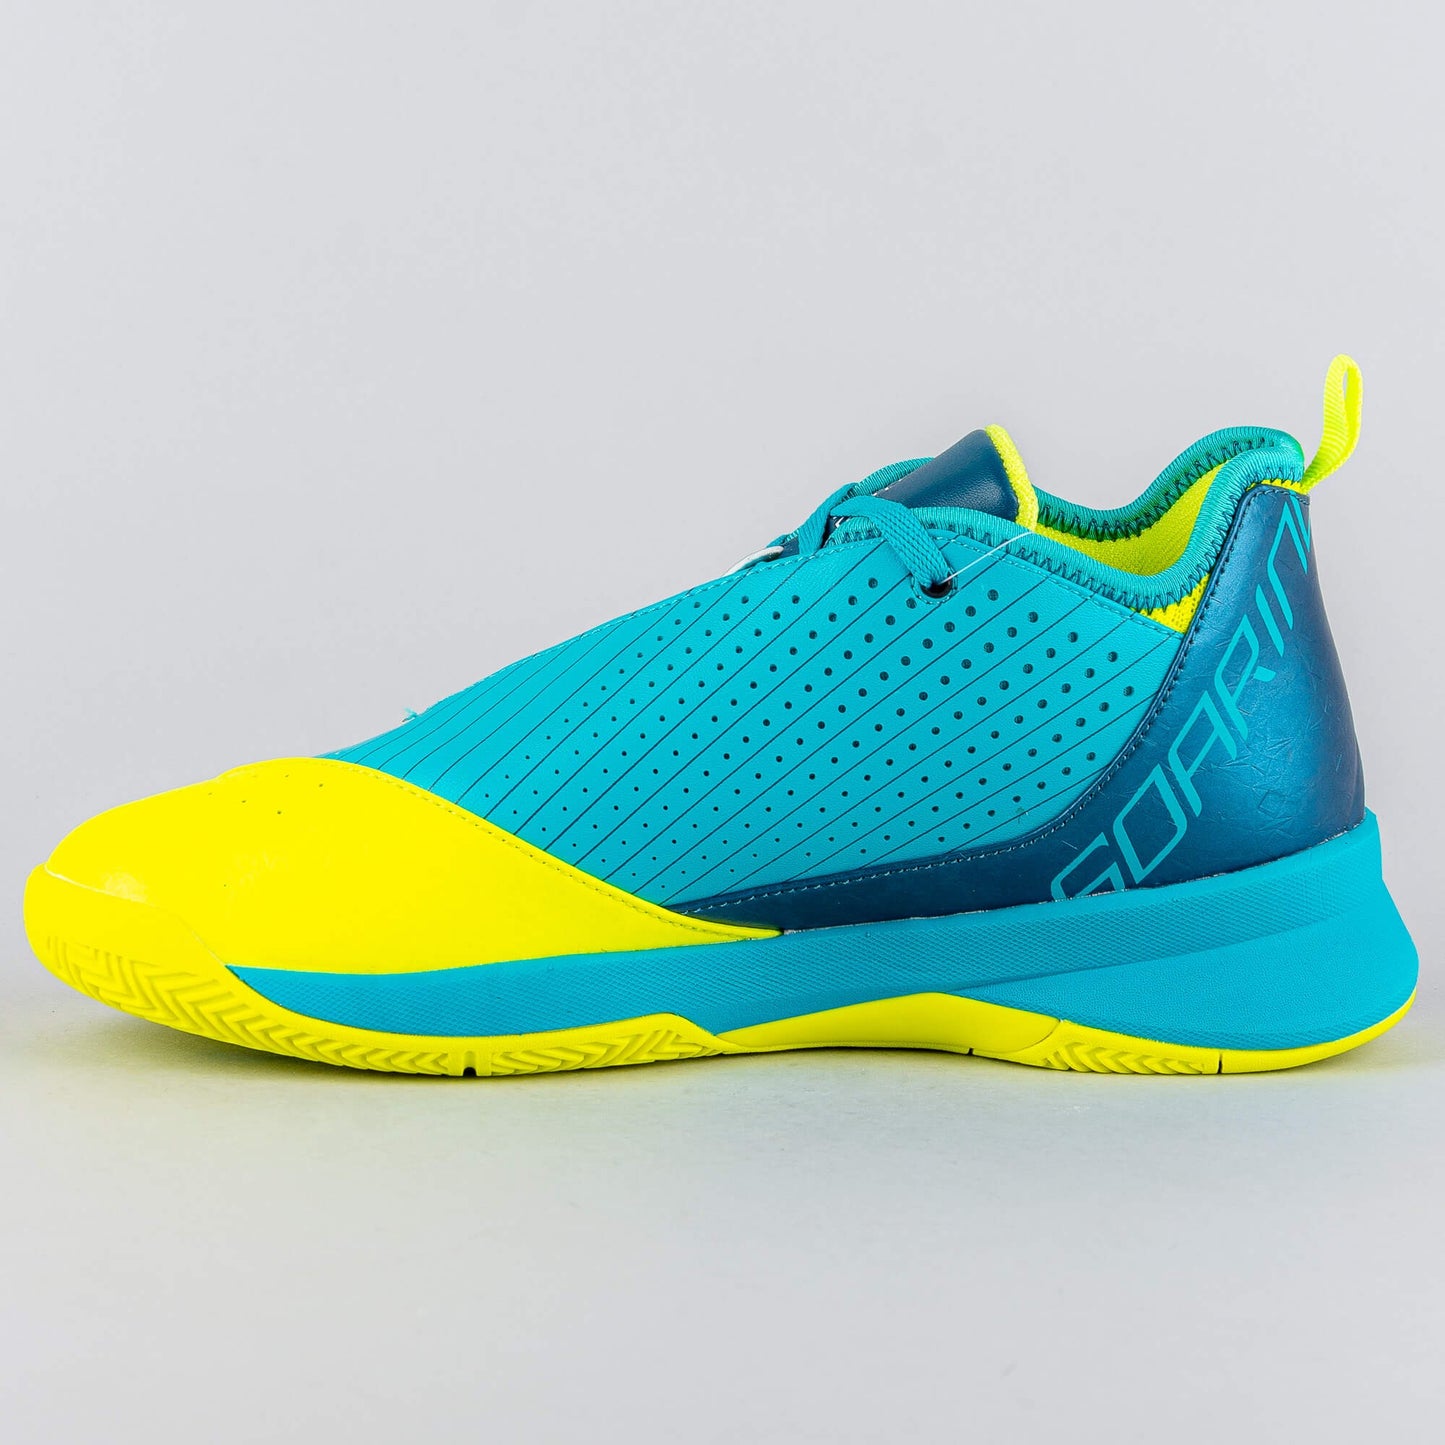 Peak Basketball Shoes Soaring Low Robin Blue/Fluorescent Yellow